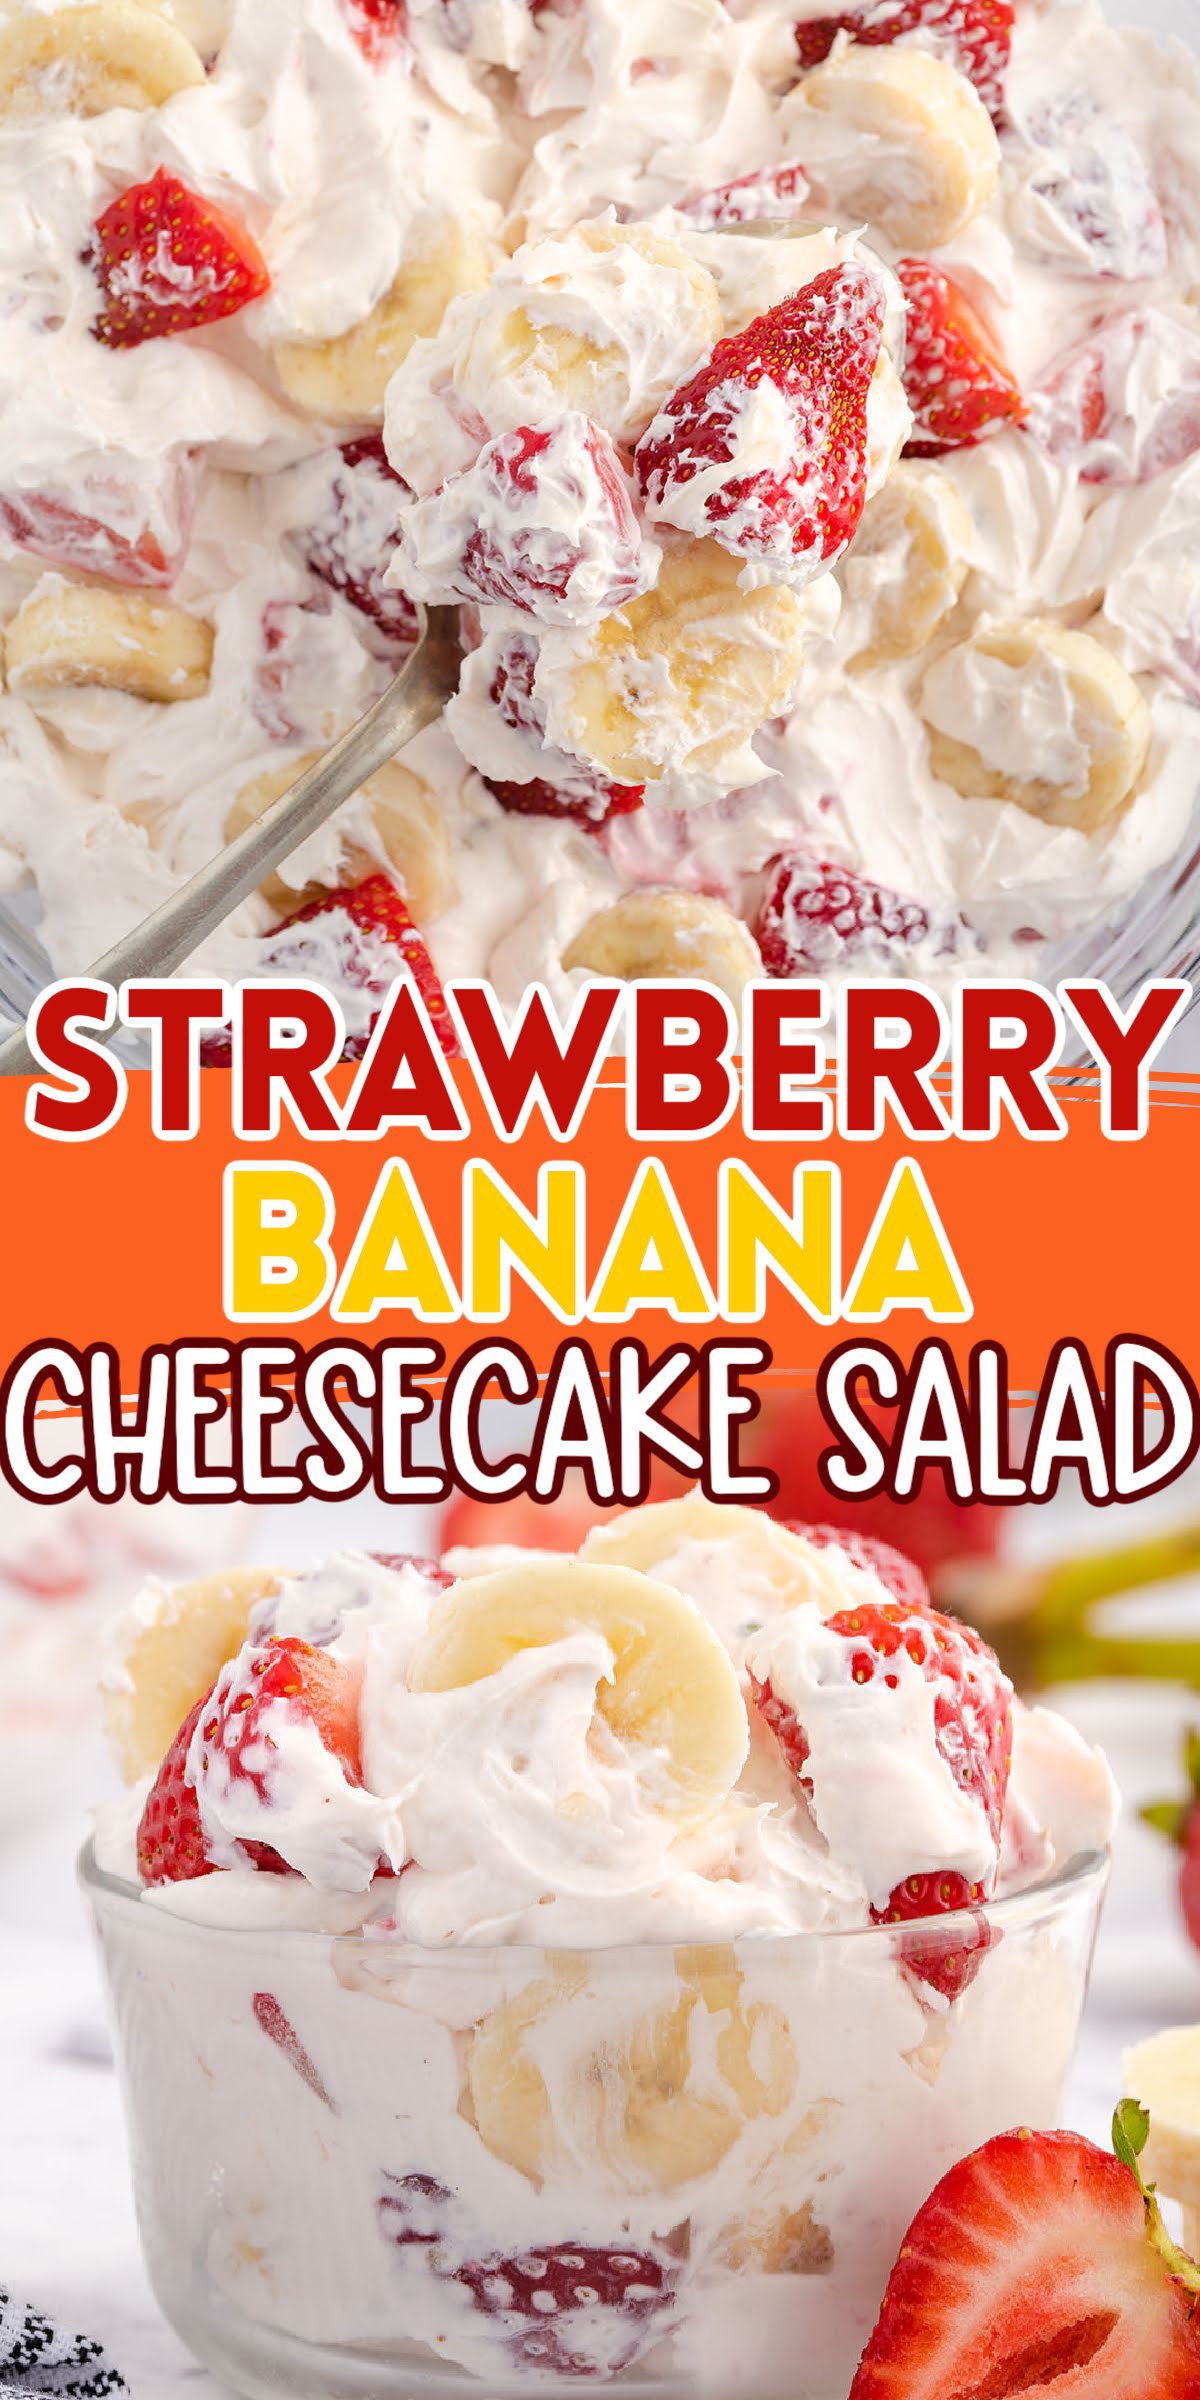 Banana Strawberry Cheesecake Salad pinterest